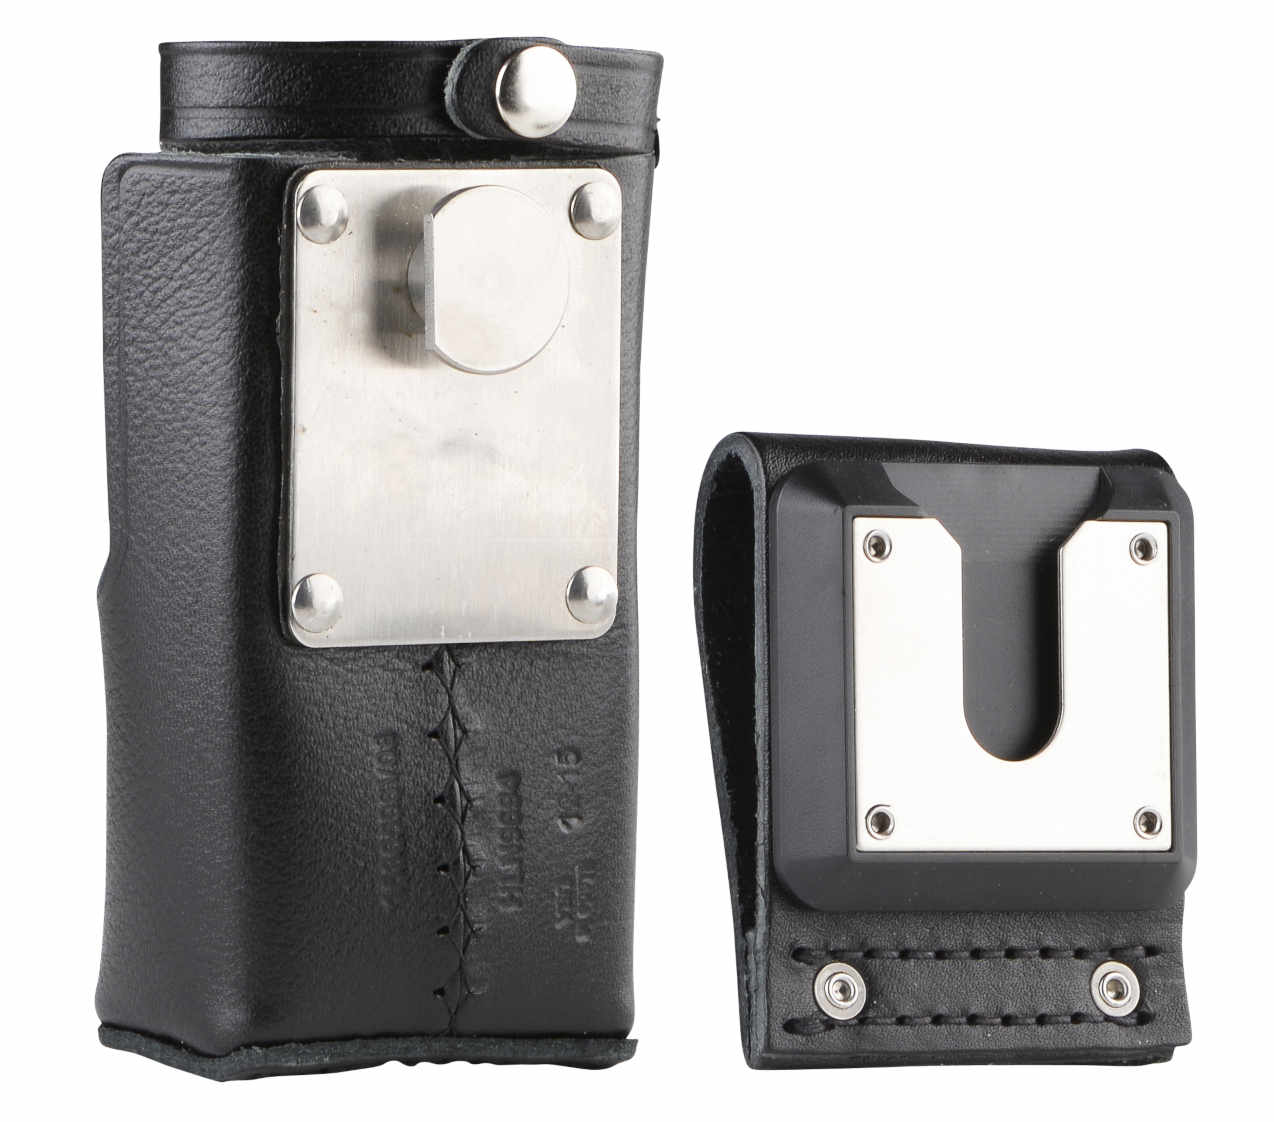 Motorola Leather Carry Case with Swivel Belt Loop for Keypad Models HLN9694A